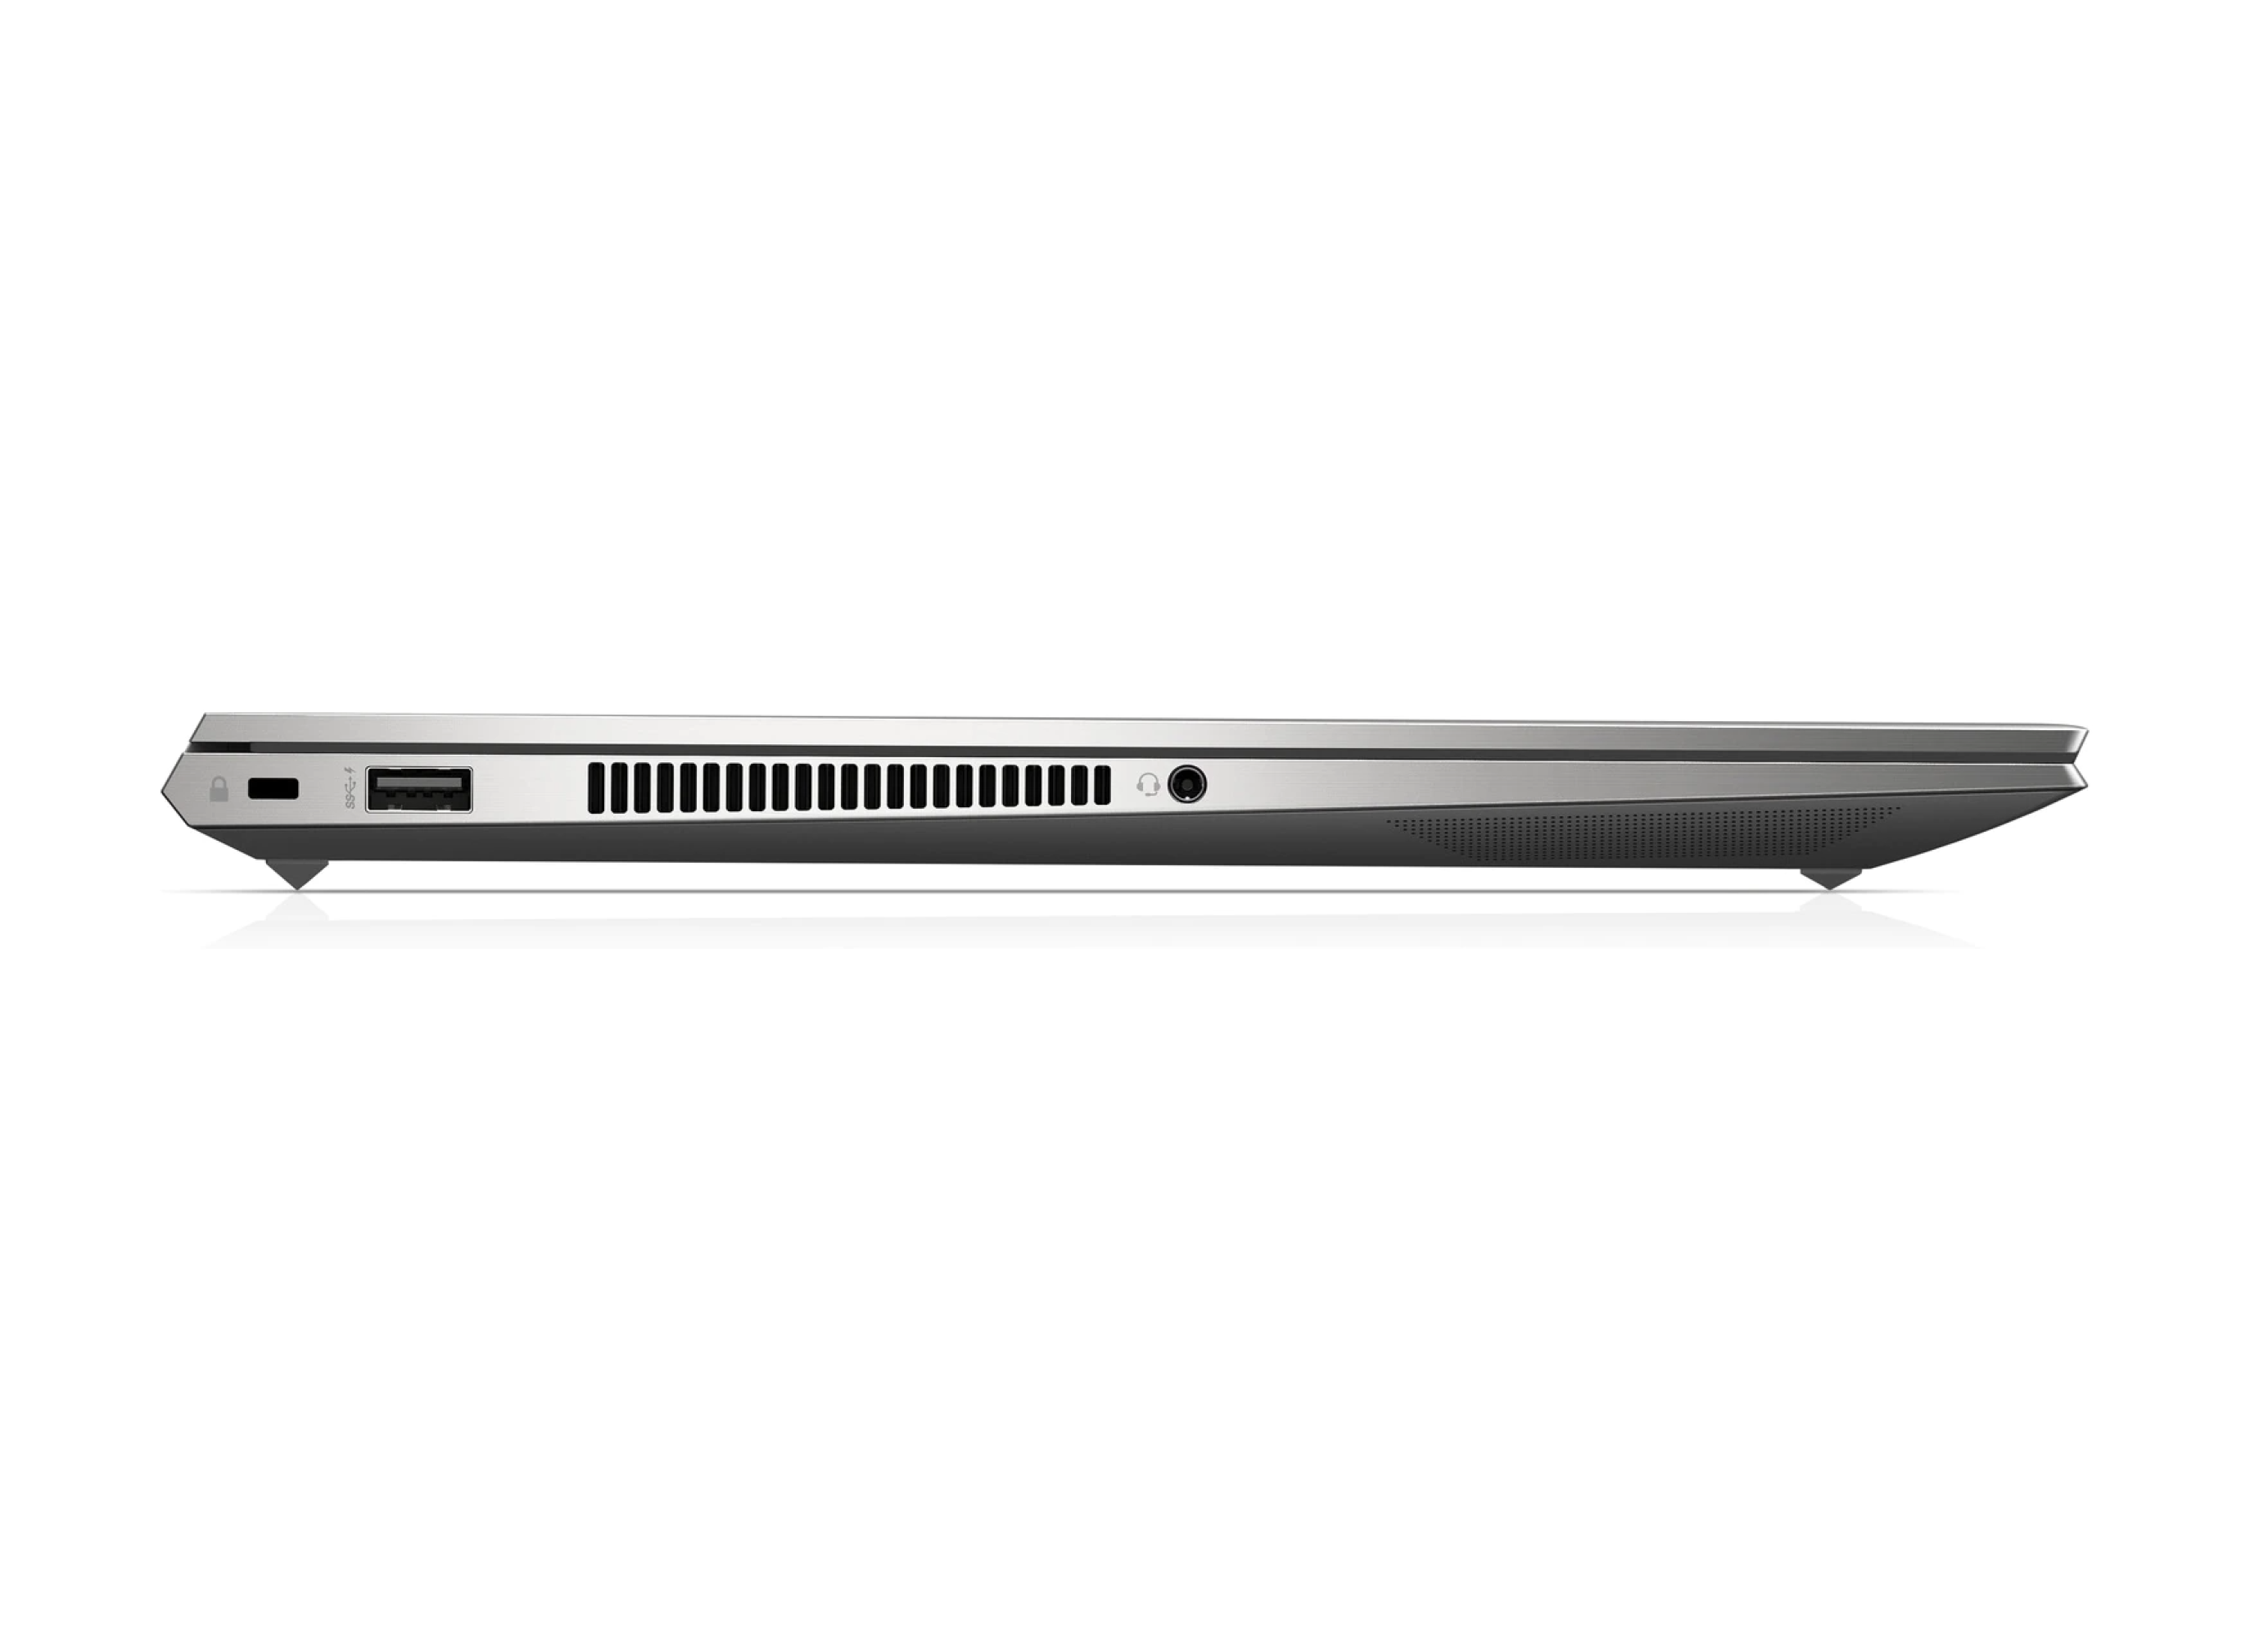  خرید لپ تاپ اچ پی زد بوک پاور G7 استودیو | خرید لپ تاپ HP ZBook G7 Studio | لاکچری لپ تاپ 